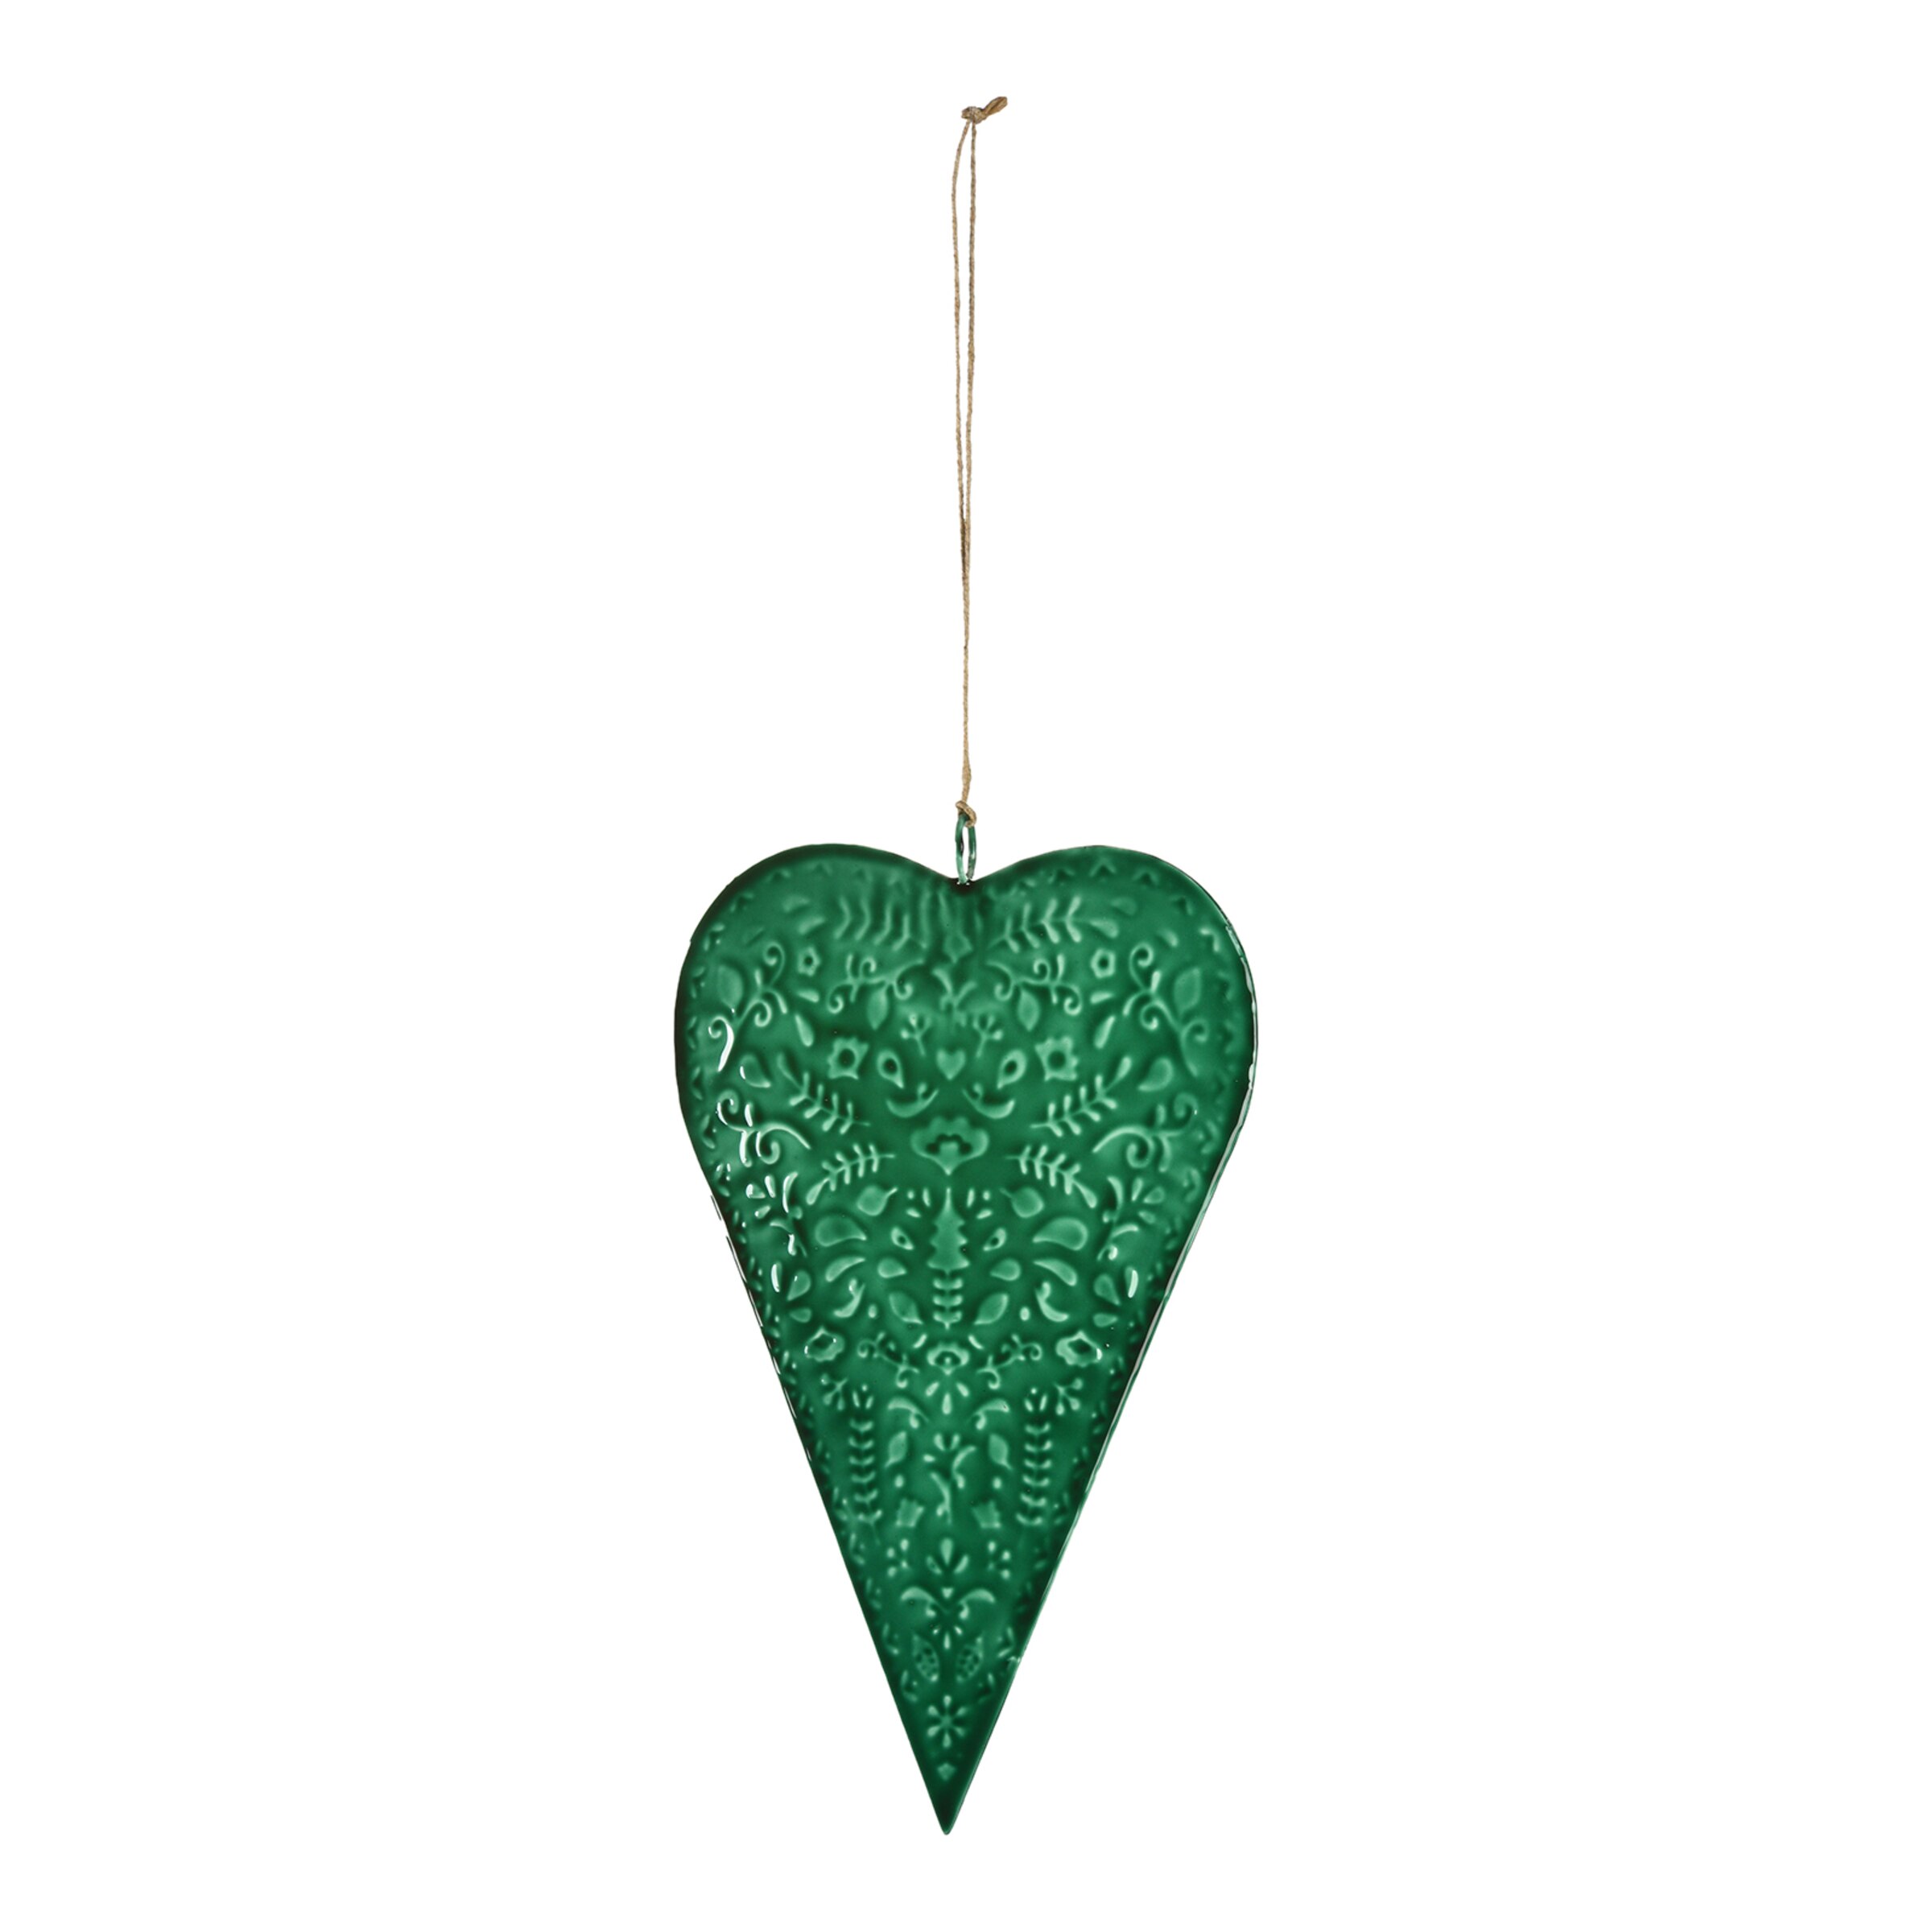 dekorativer Anhänger Herz Metallherz handbemalt grün-Creme antik patiniert  Landhausoptik (groß ca. 19 cm)